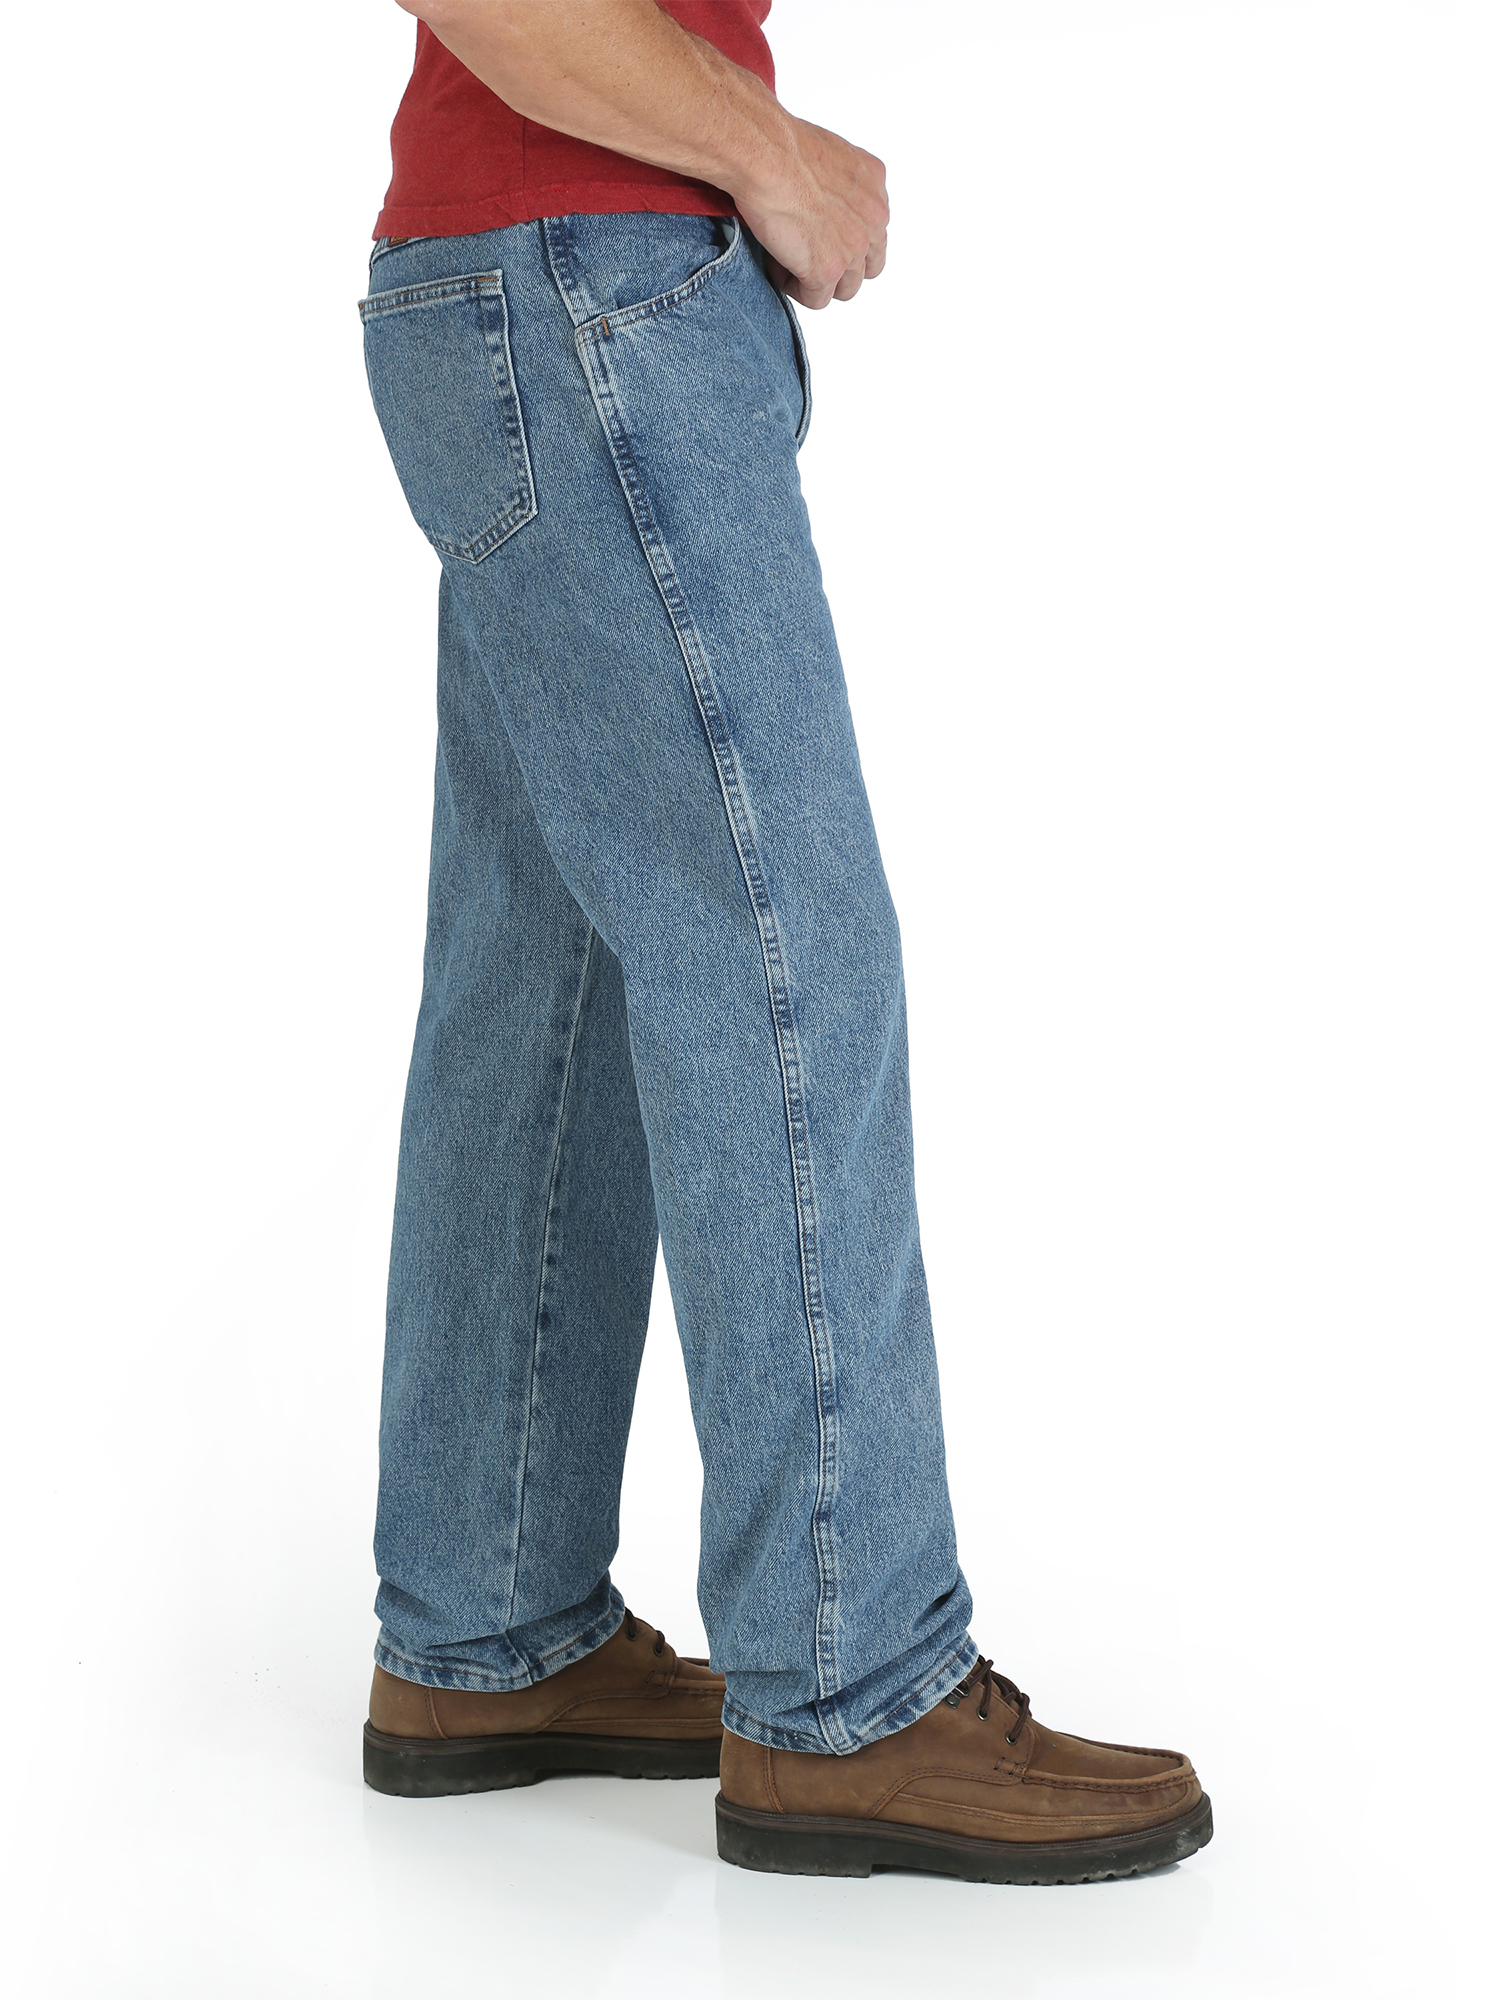 Wrangler Rustler Men's and Big Men's Regular Fit Jeans - image 3 of 5